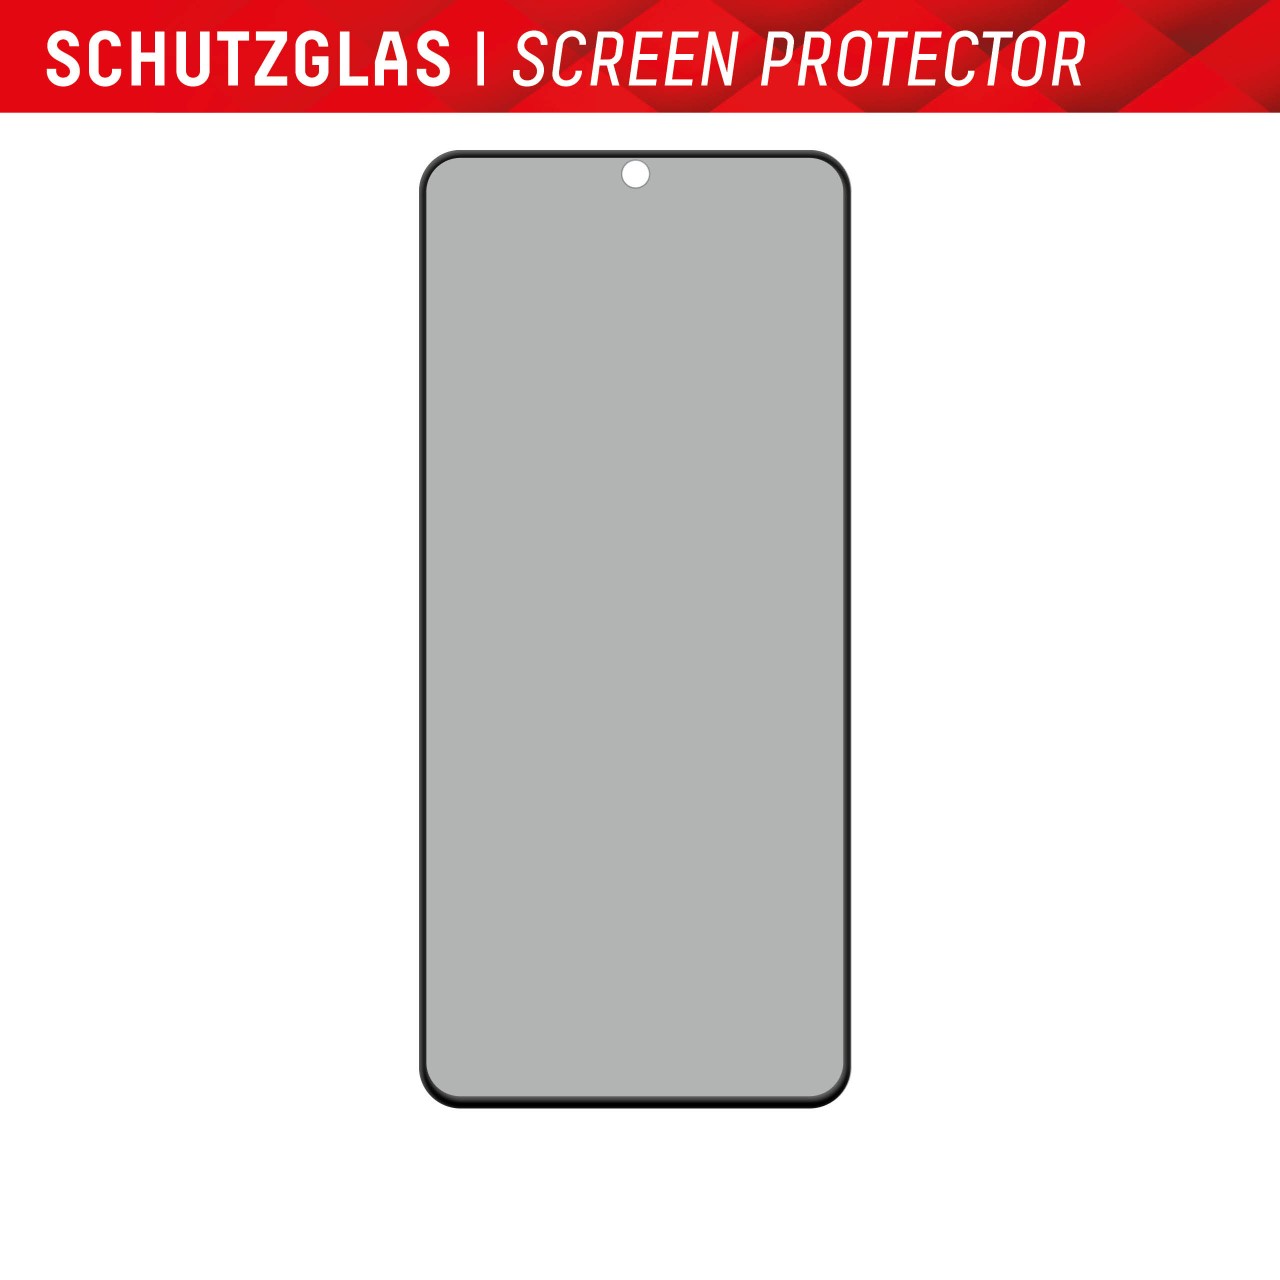 Samsung Galaxy S22+/S23+ Privacy Schutzglas